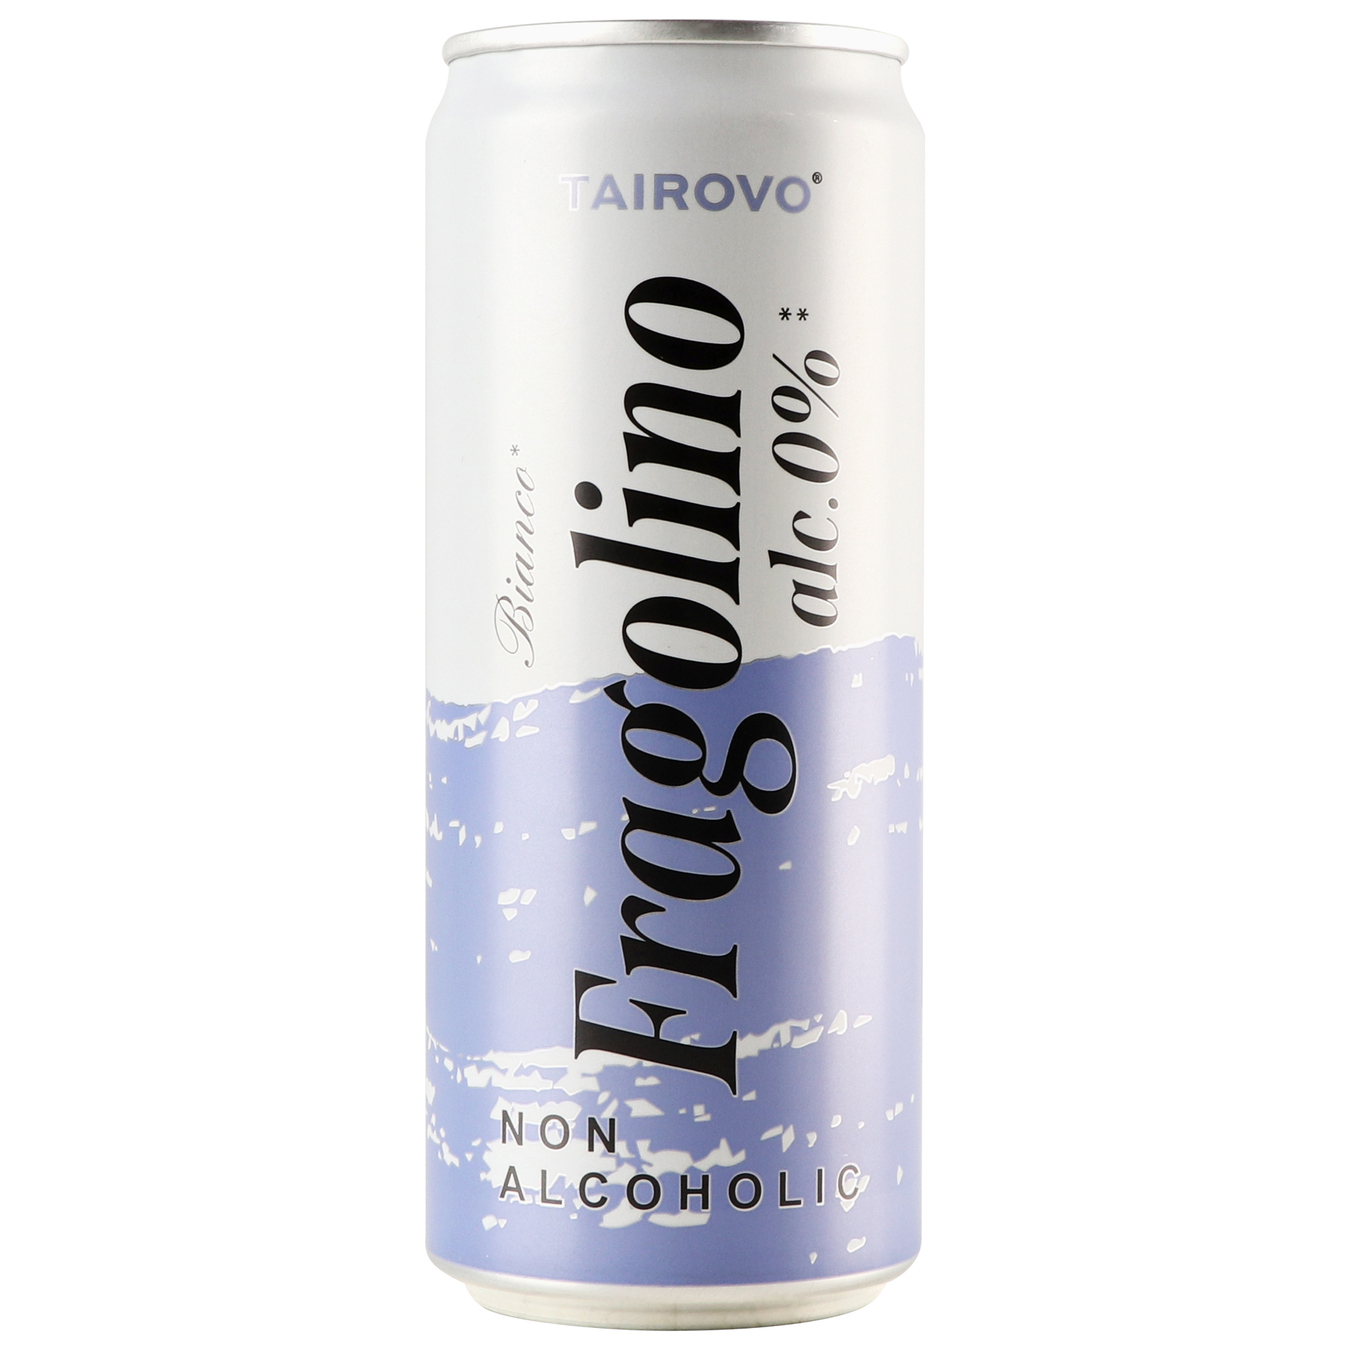 Wine drink Tairovo Fragolino Bianco non-alcoholic sparkling 0% 0.33l